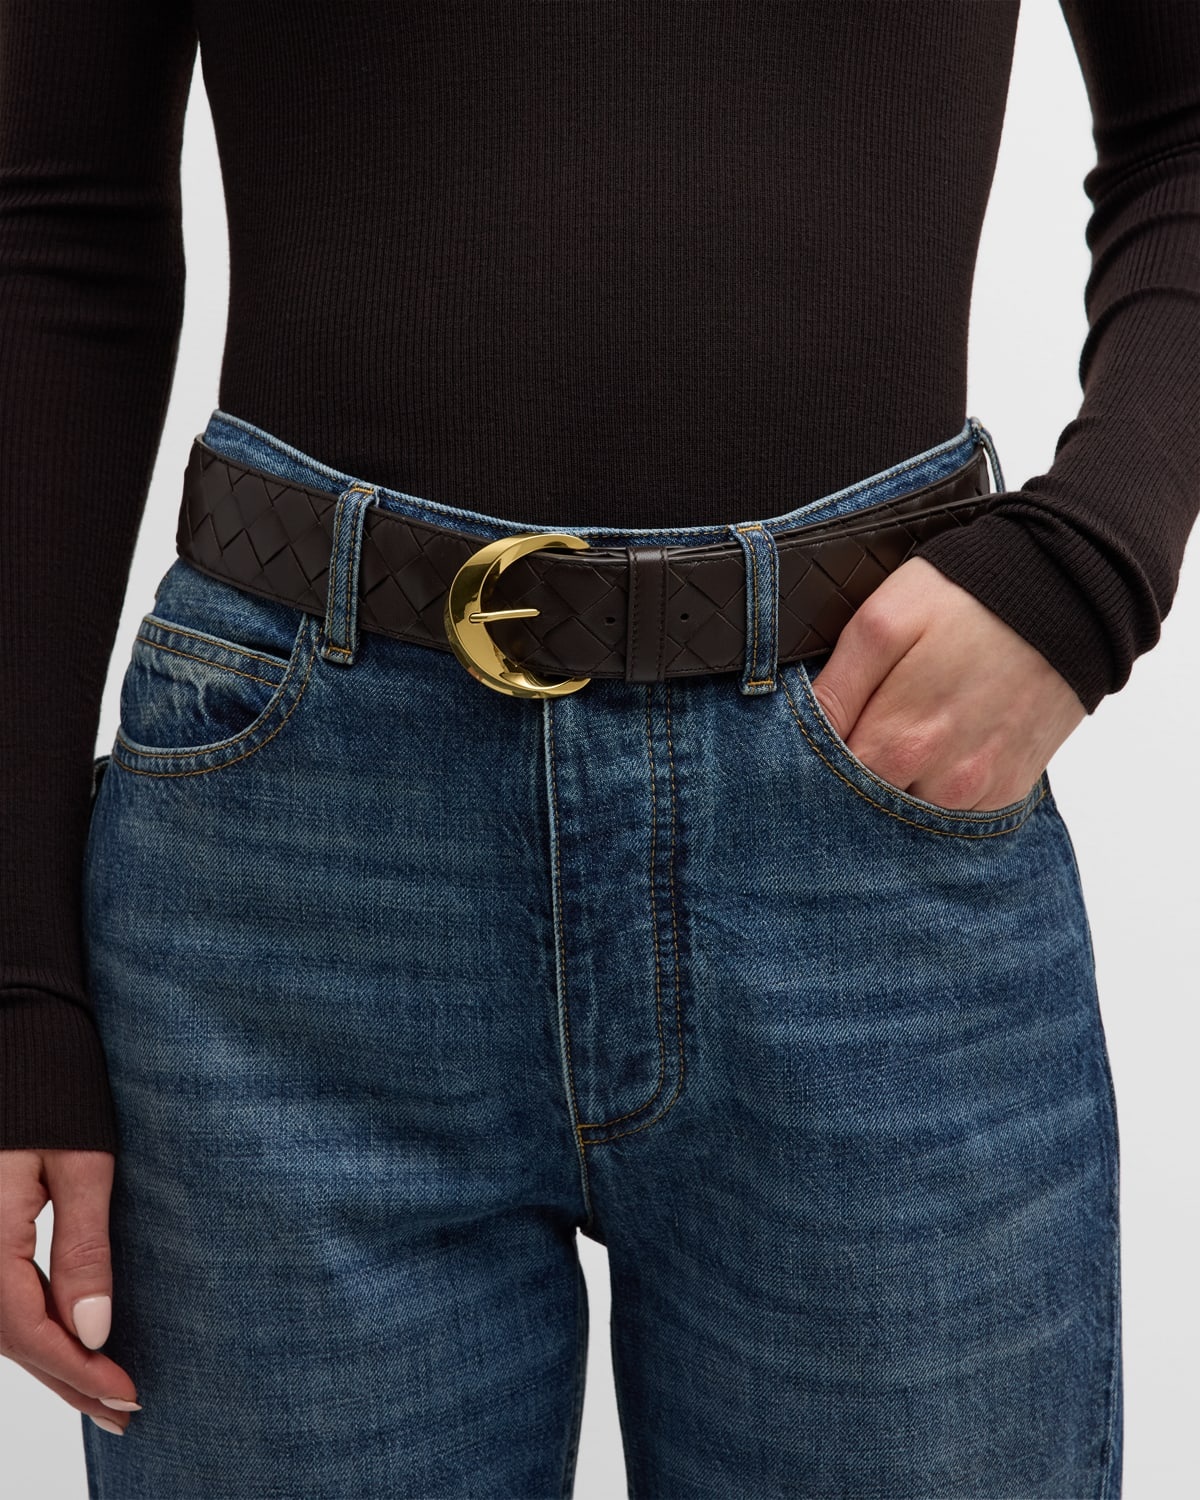 Bevel Buckled Woven Leather Belt - 2